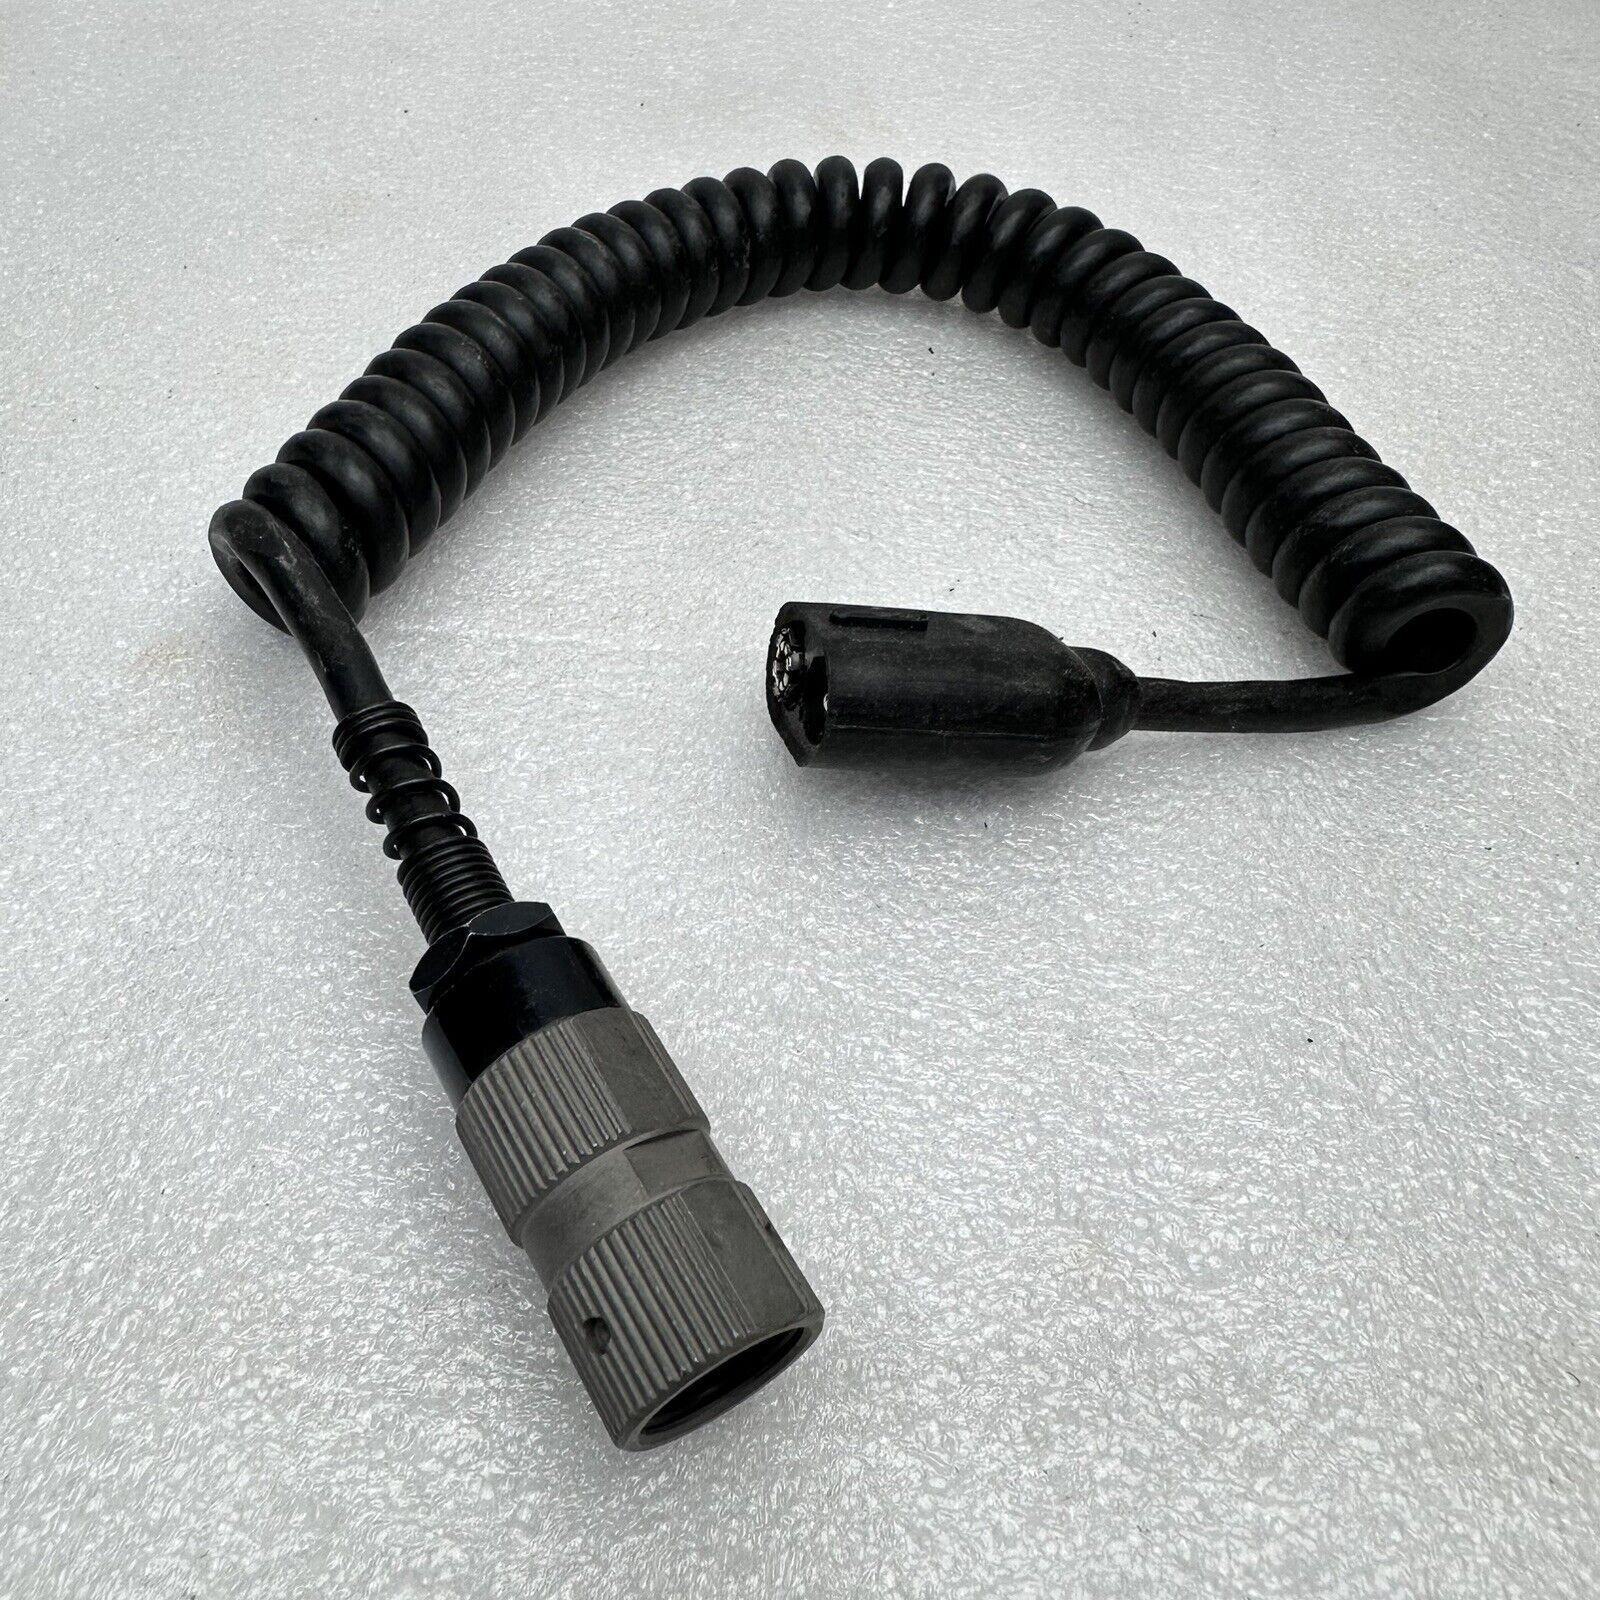 Single Lead Break-Away Communication Cable Cord w/ U-229 Connector Military CVC